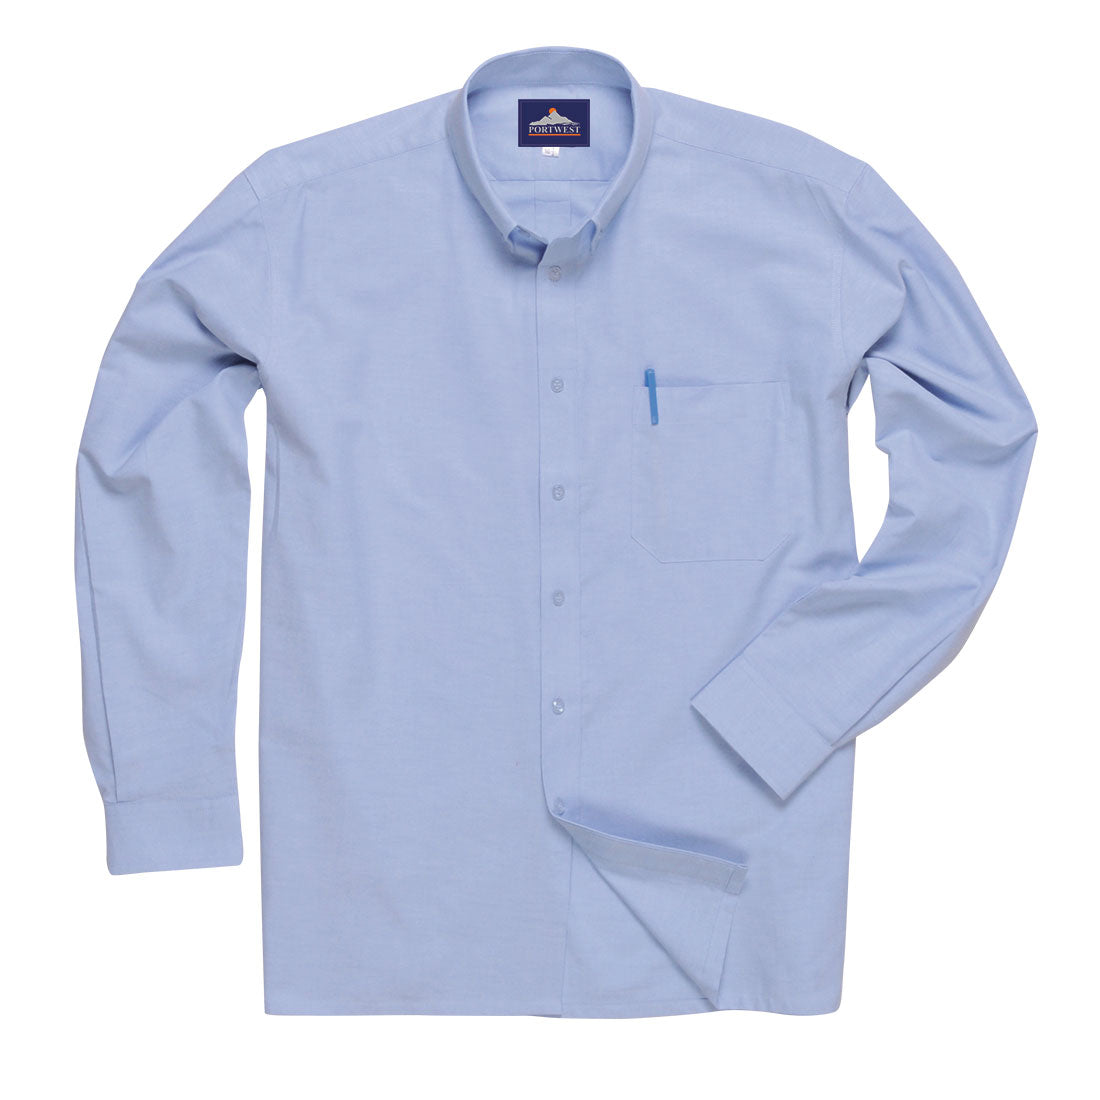 Easycare Oxford Shirt, Long Sleeves  (S117)